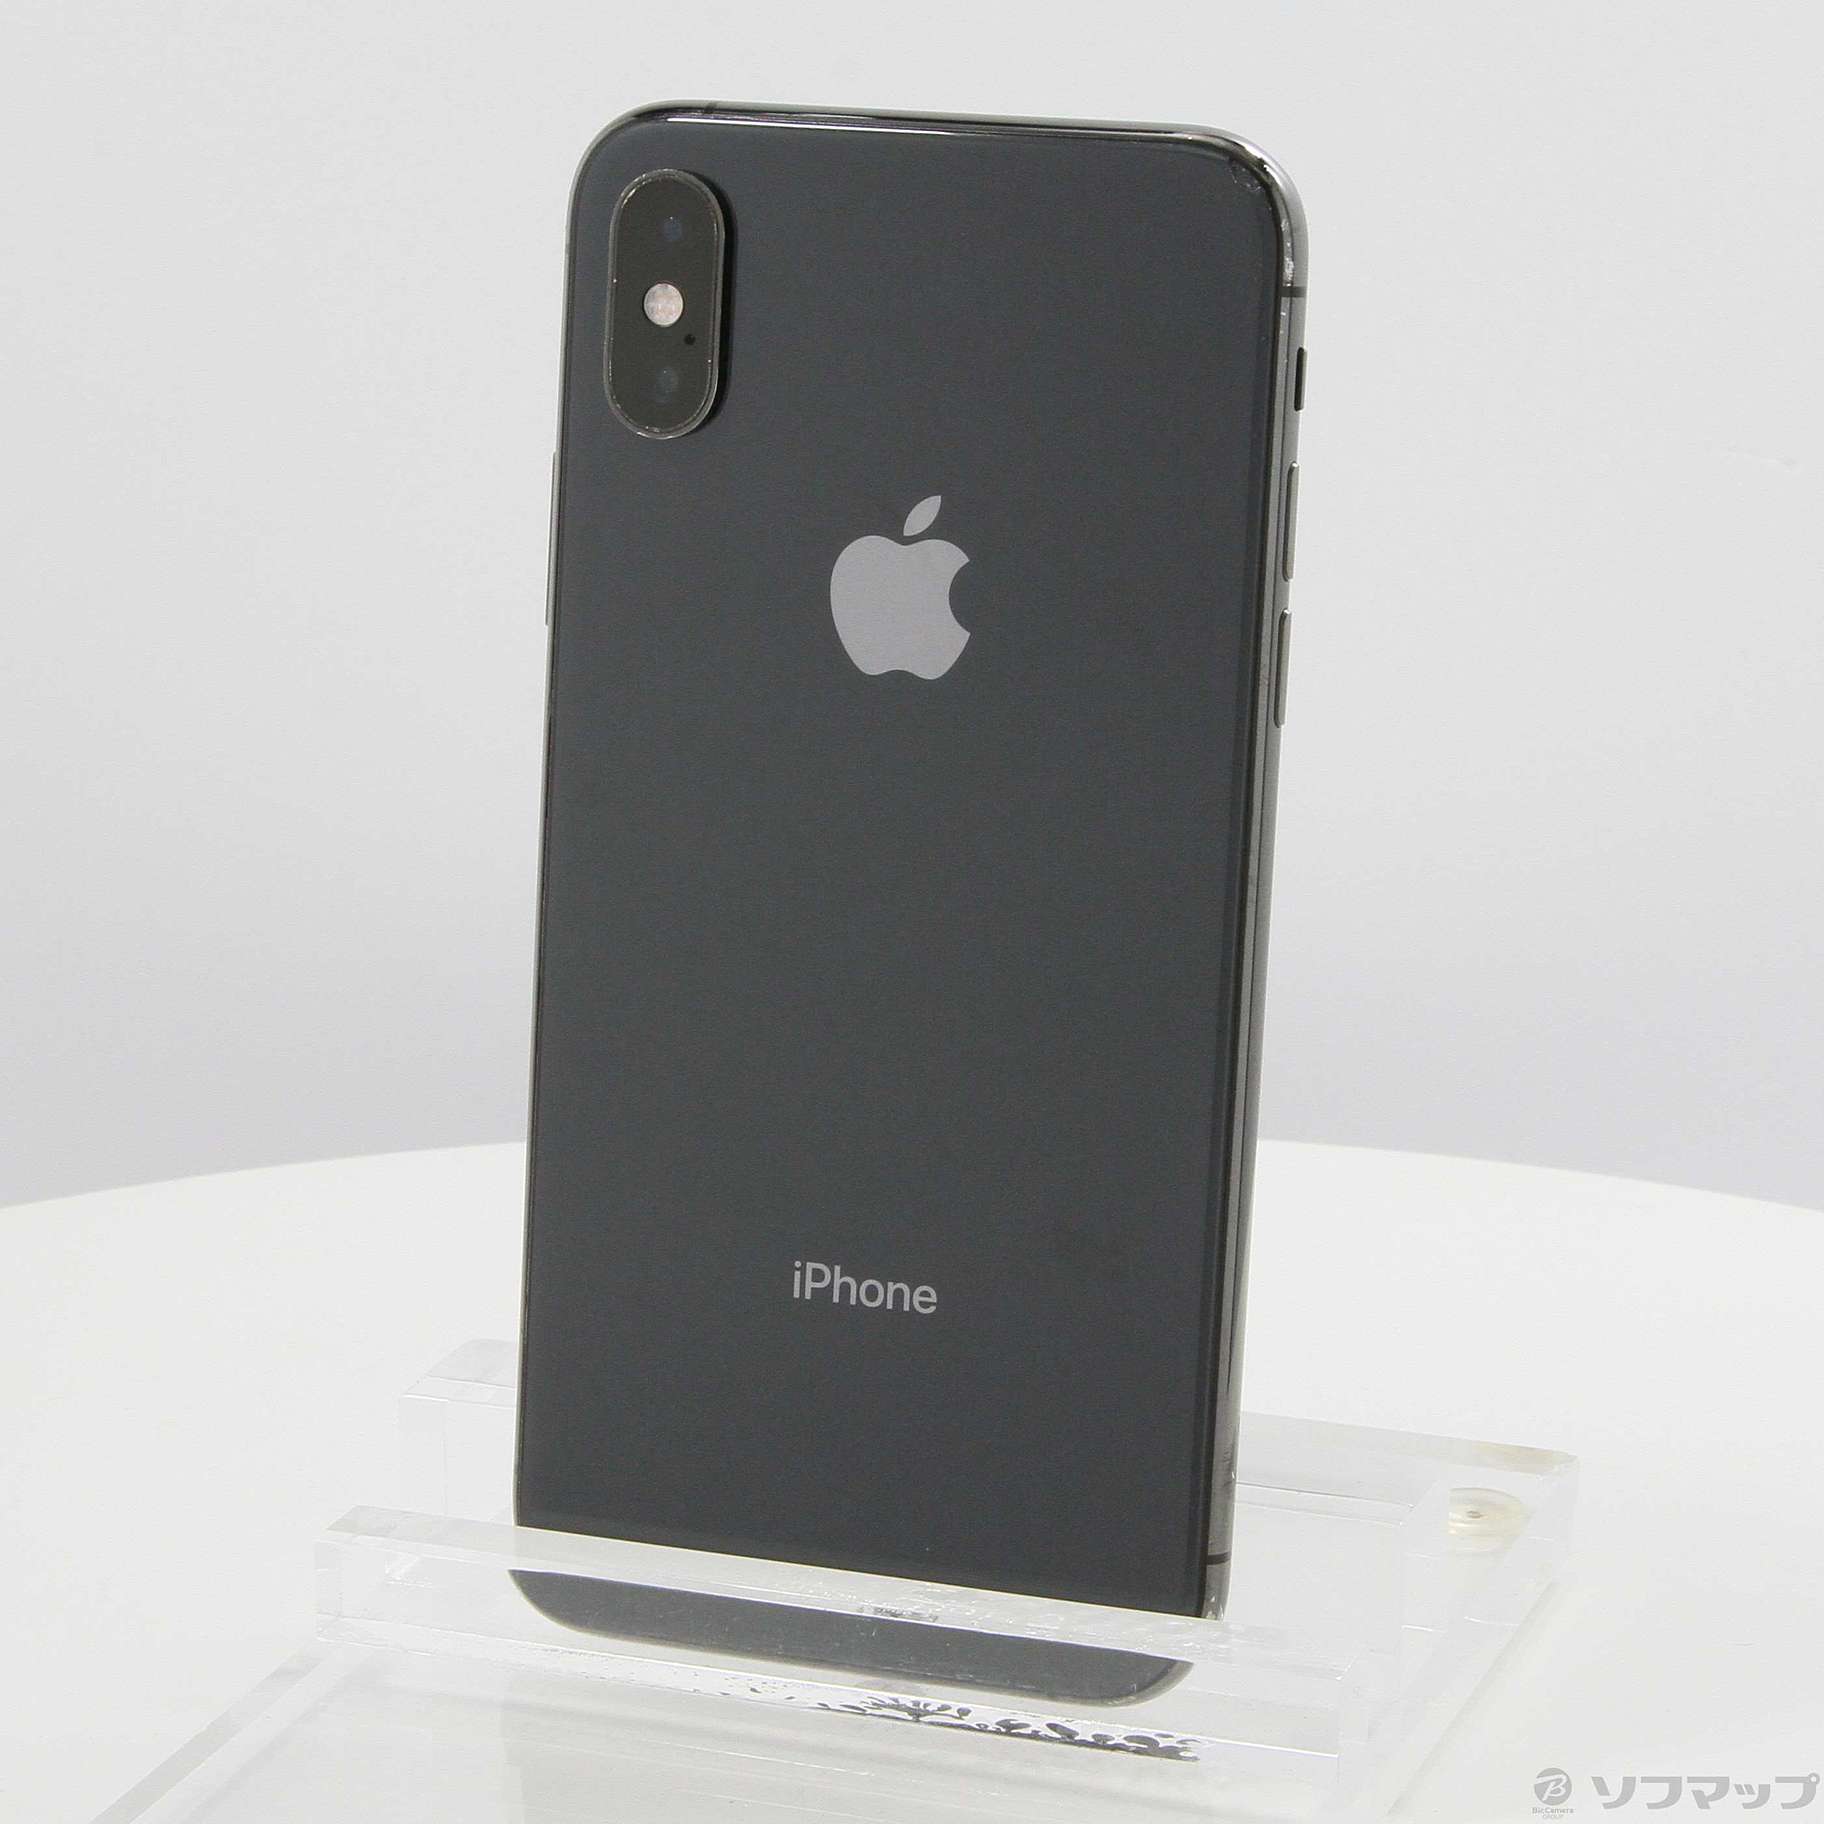 iPhoneXs 64GB Spacegray スペースグレイ simフリー - スマートフォン本体